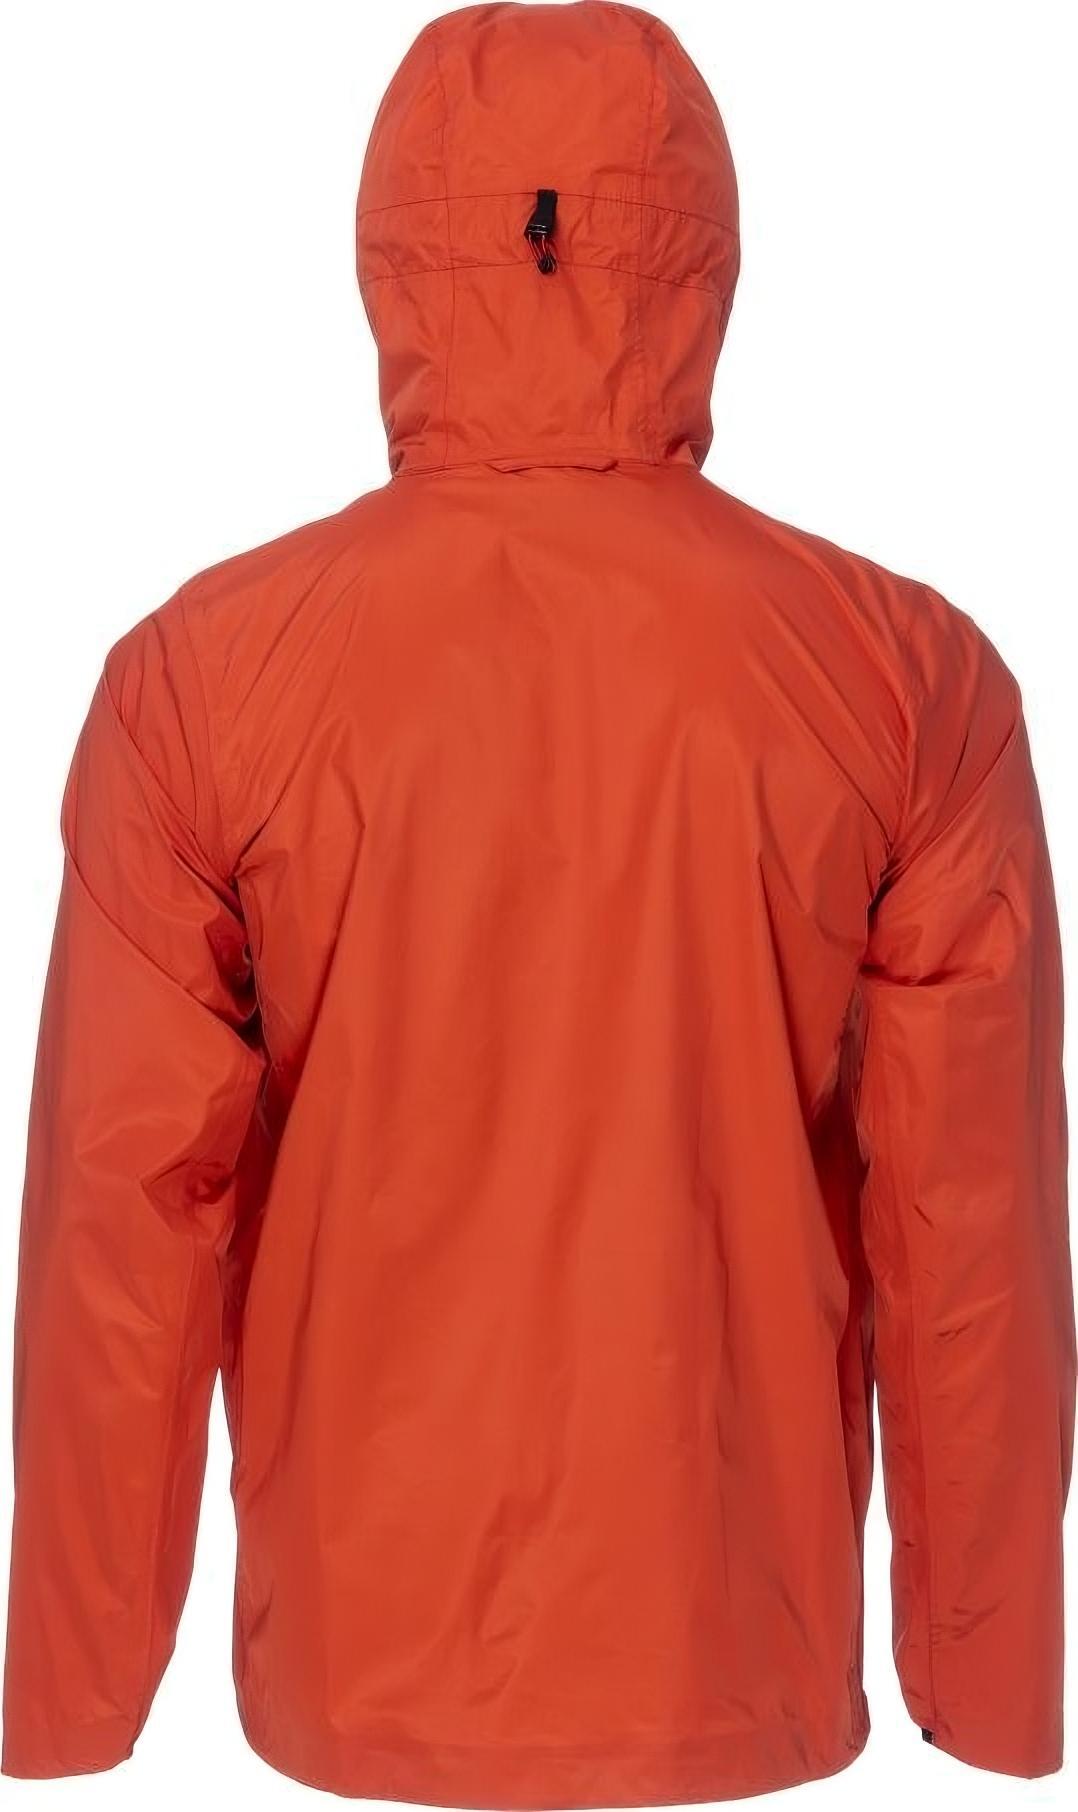 Куртка мужская Turbat Isla Mns orange red XL красный фото 4